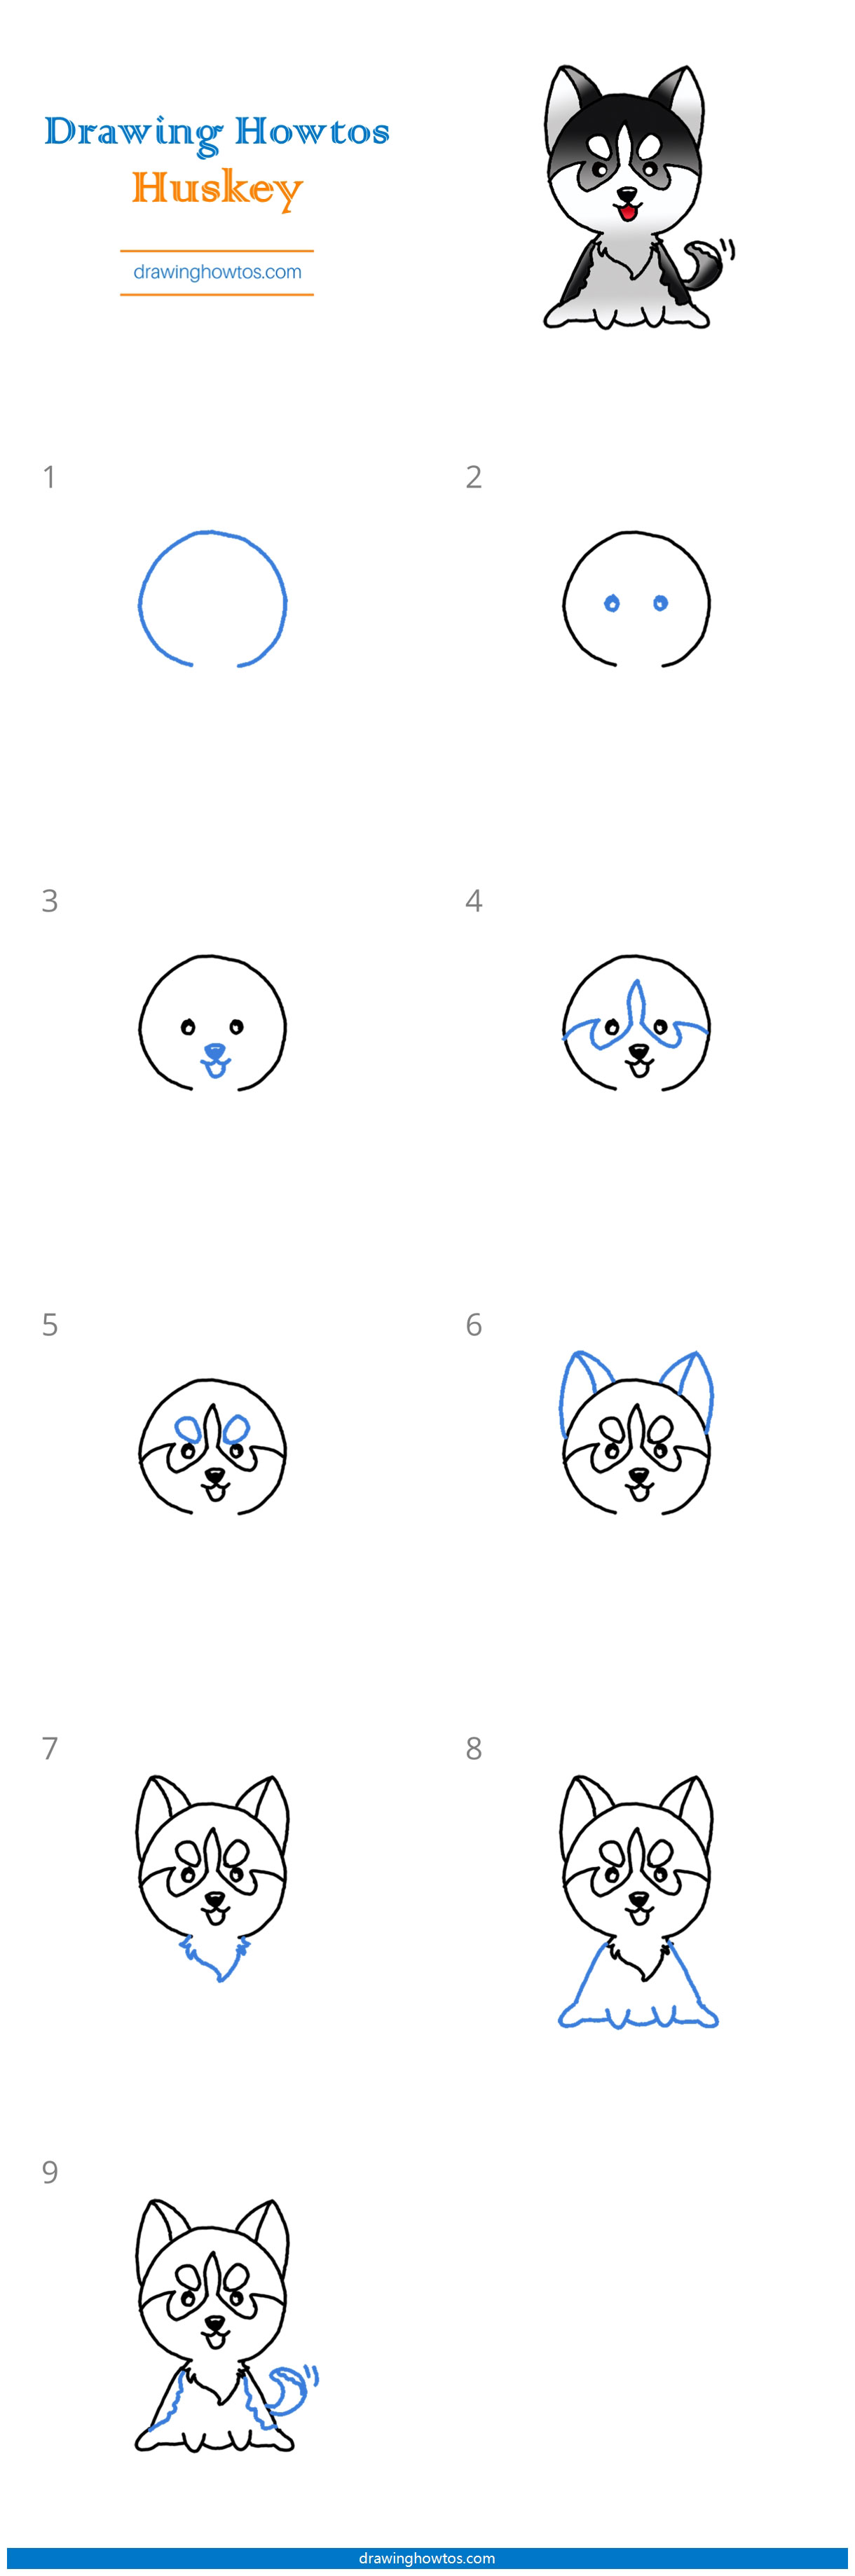 How to Draw a Husky Step by Step